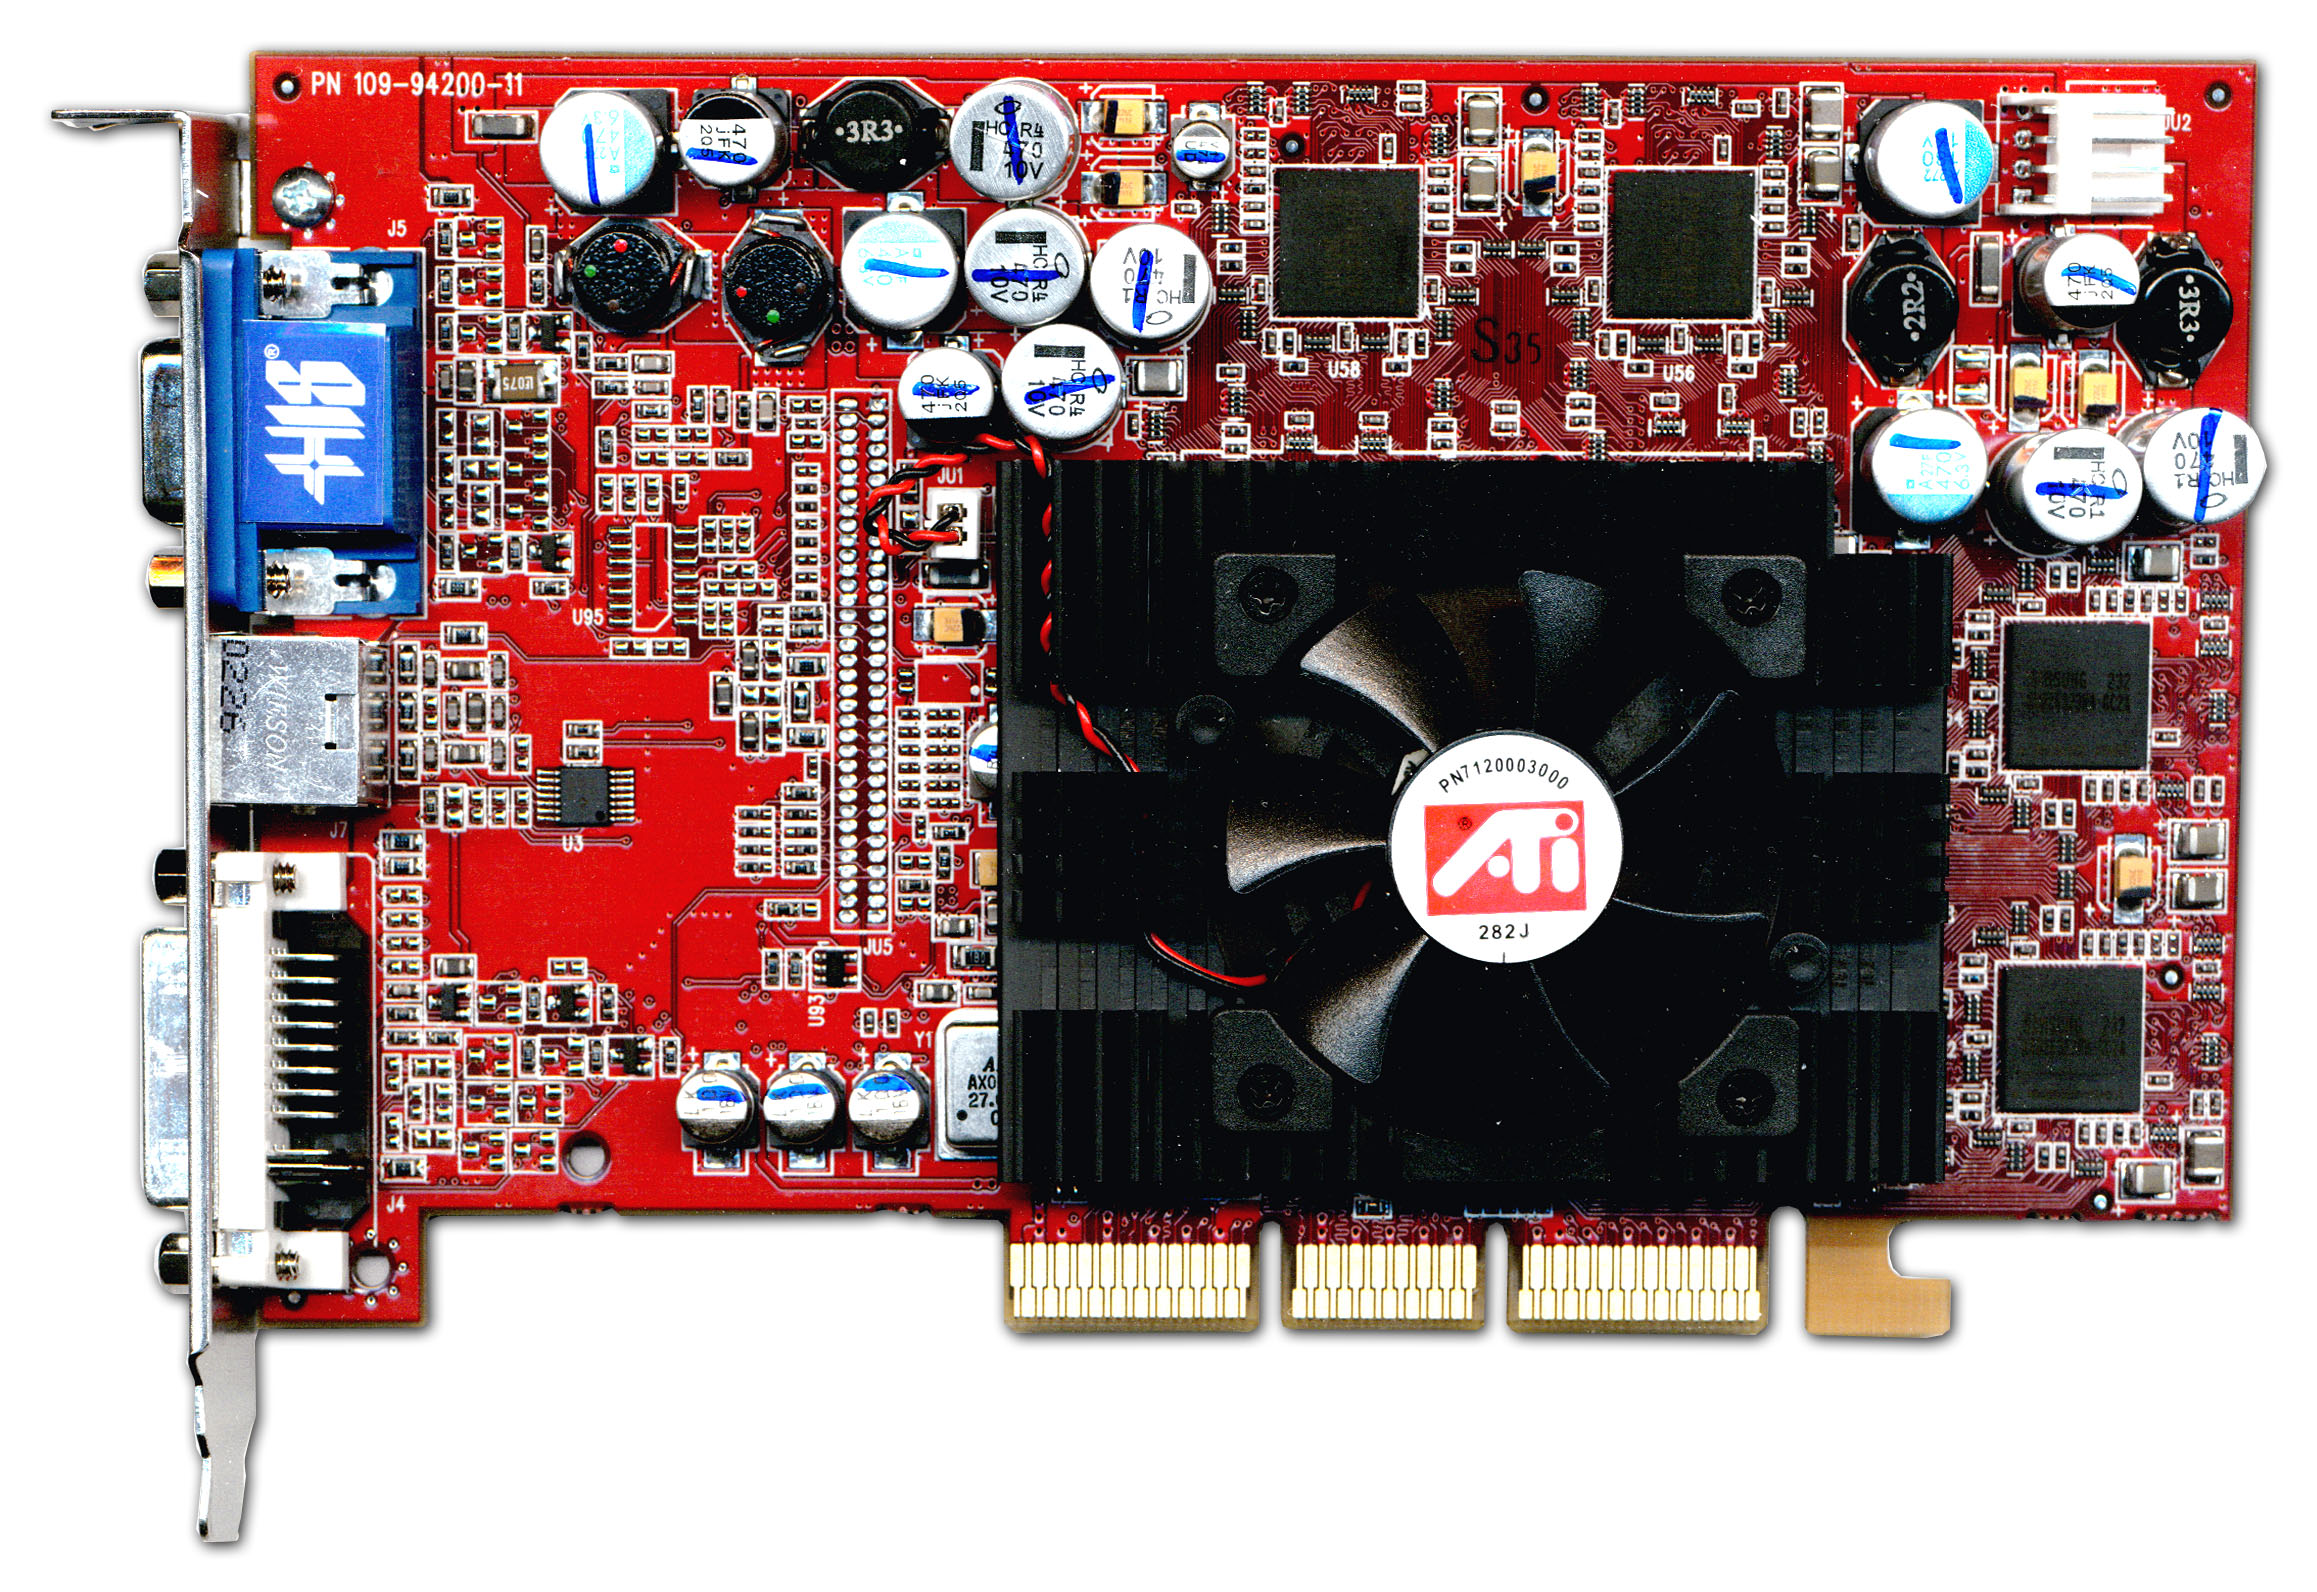 Radeon r7 9700. ATI Radeon 9700 Pro. Видеокарта ATI Radeon 9700 сапфир. Видеокарта AGP 9700. Radeon 9700 Pro x4.